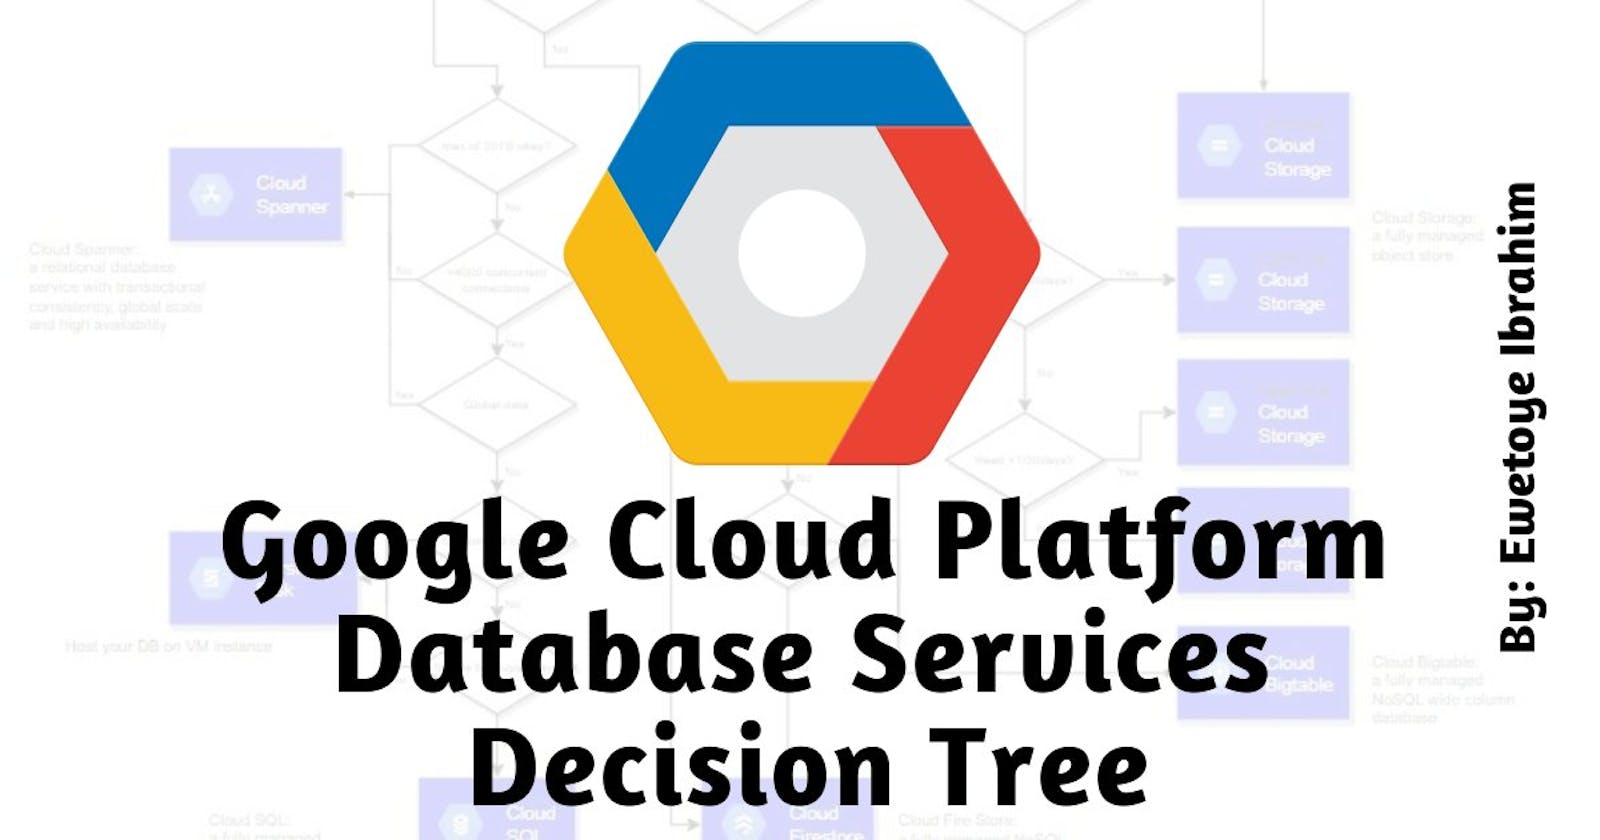 Google Cloud Platform Database Services Decision Tree in 75 Words